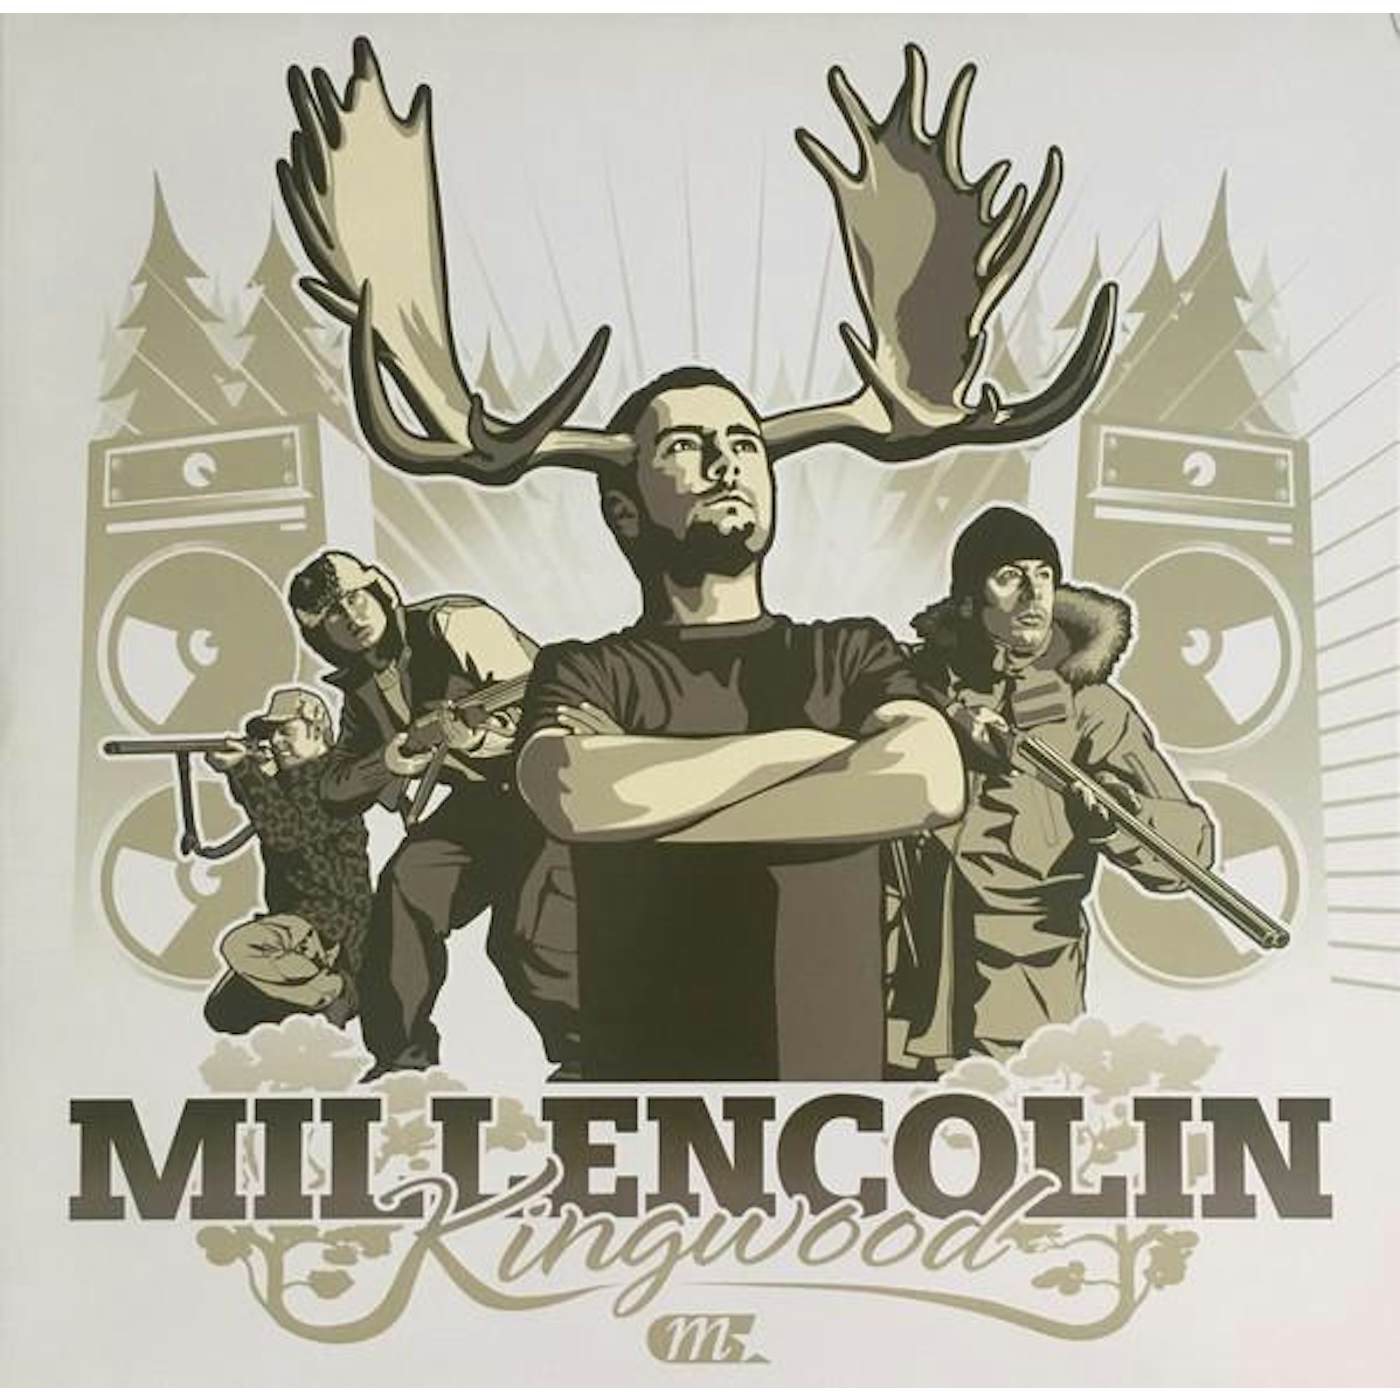 Millencolin KINGWOOD Vinyl Record